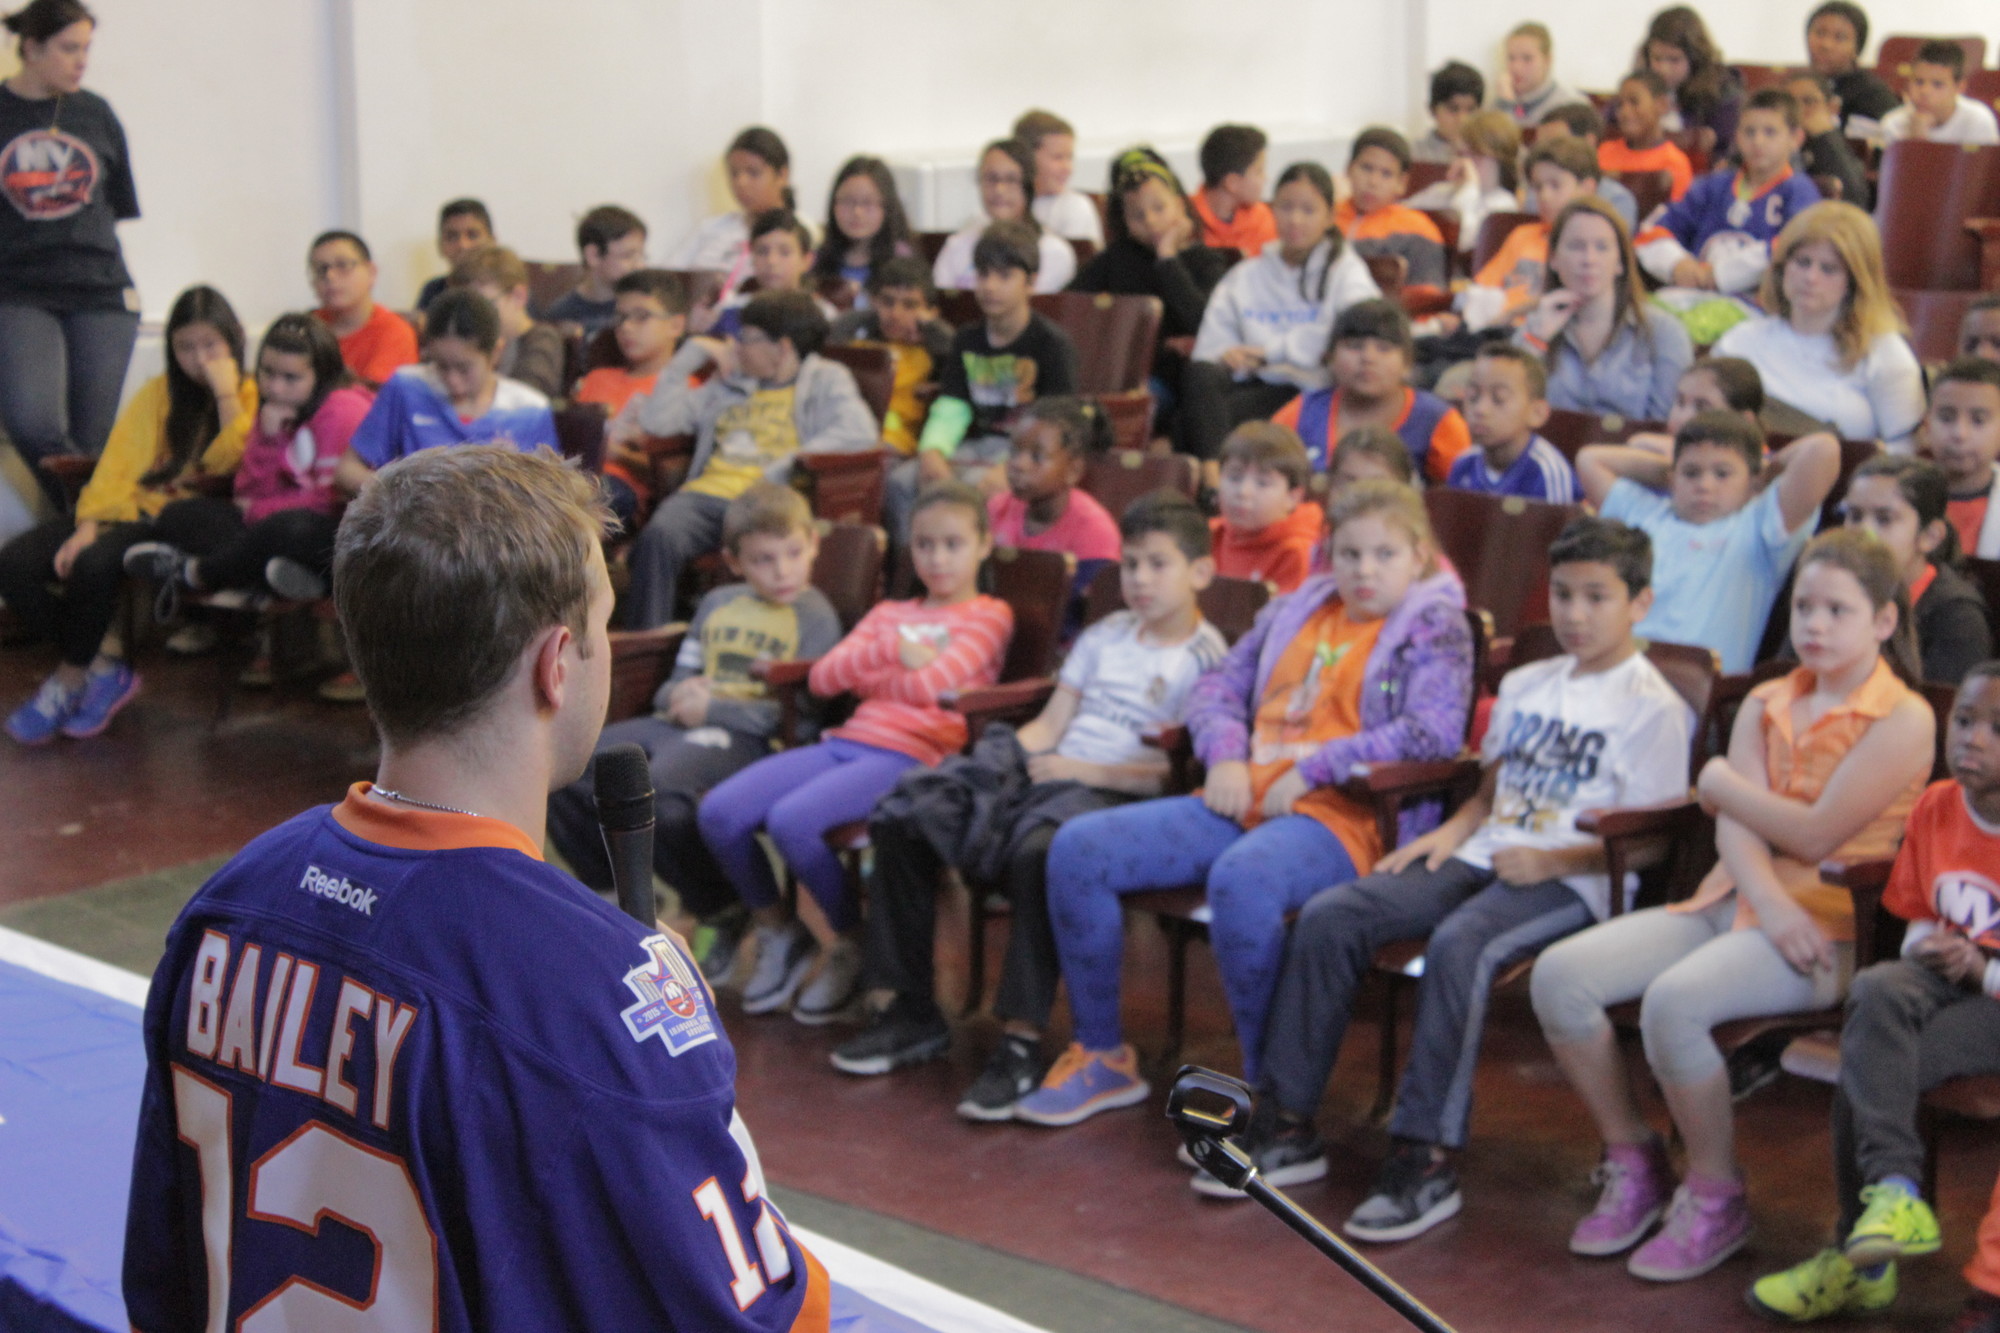 Josh Bailey and Matt Martin of the New York Islanders spoke to the students at the Wheeler Avenue School as part of Islanders School Day.